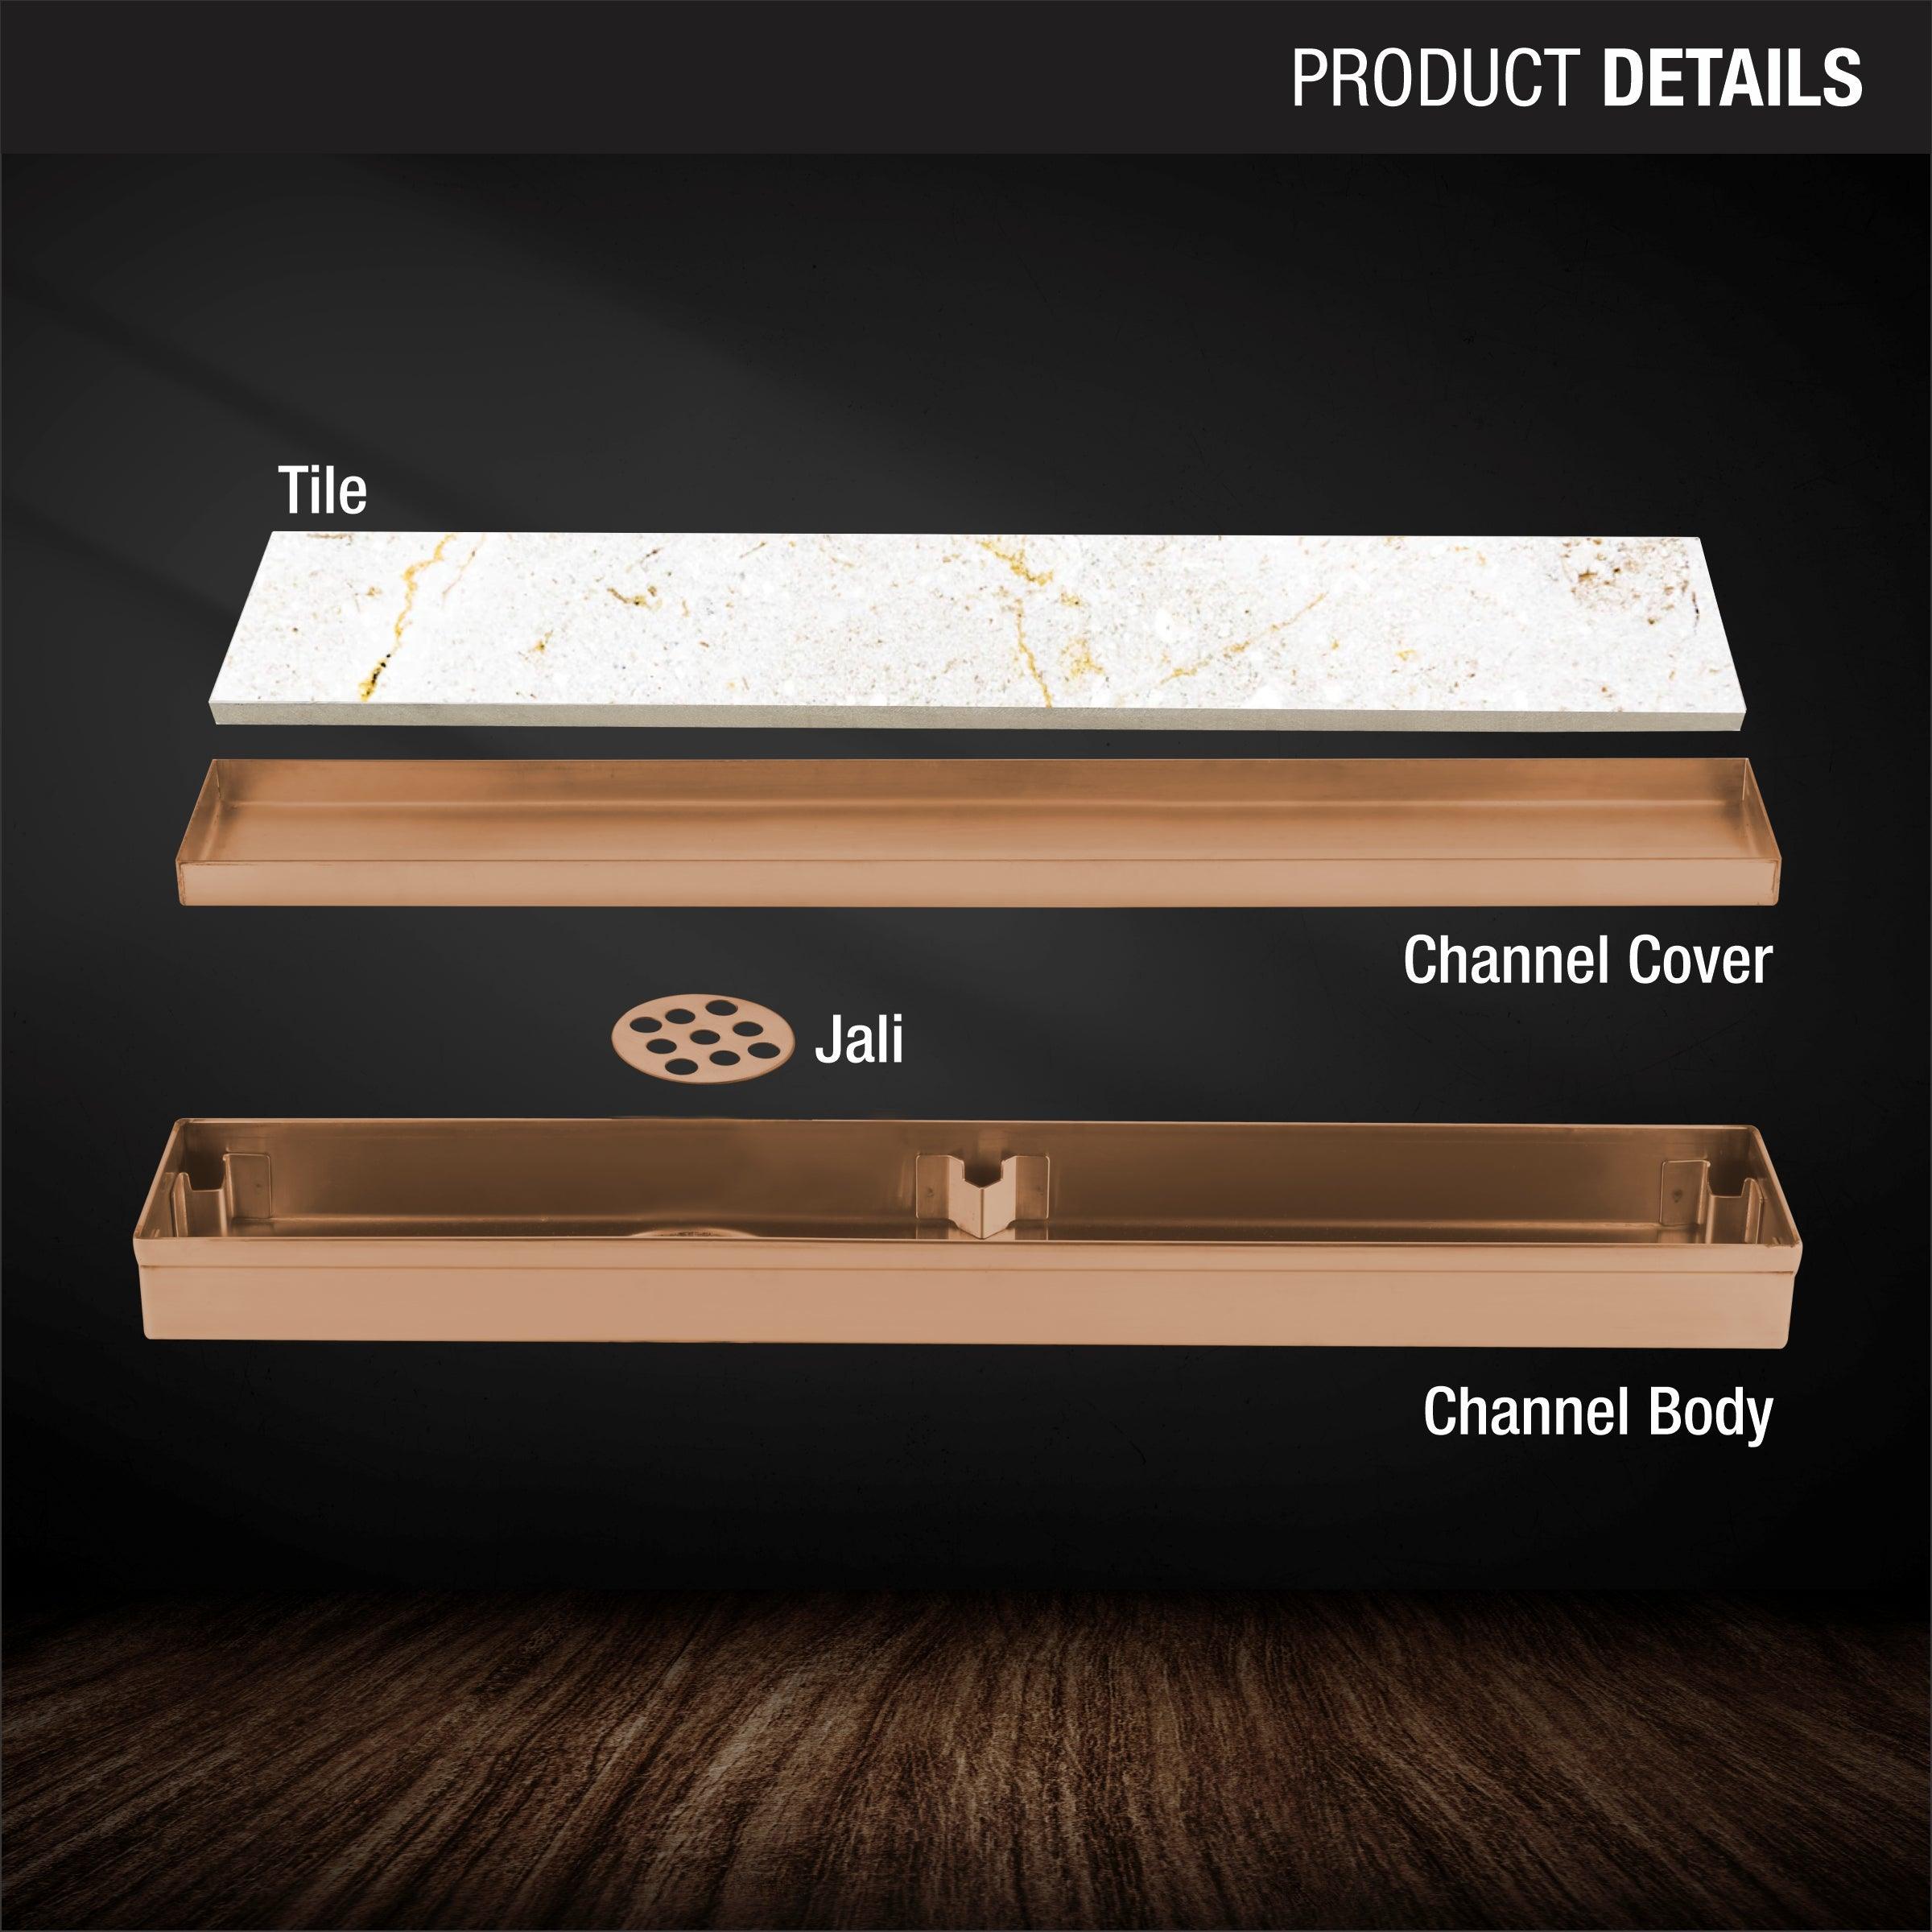 Tile Insert Shower Drain Channel - Antique Copper (24 x 2 Inches) product details